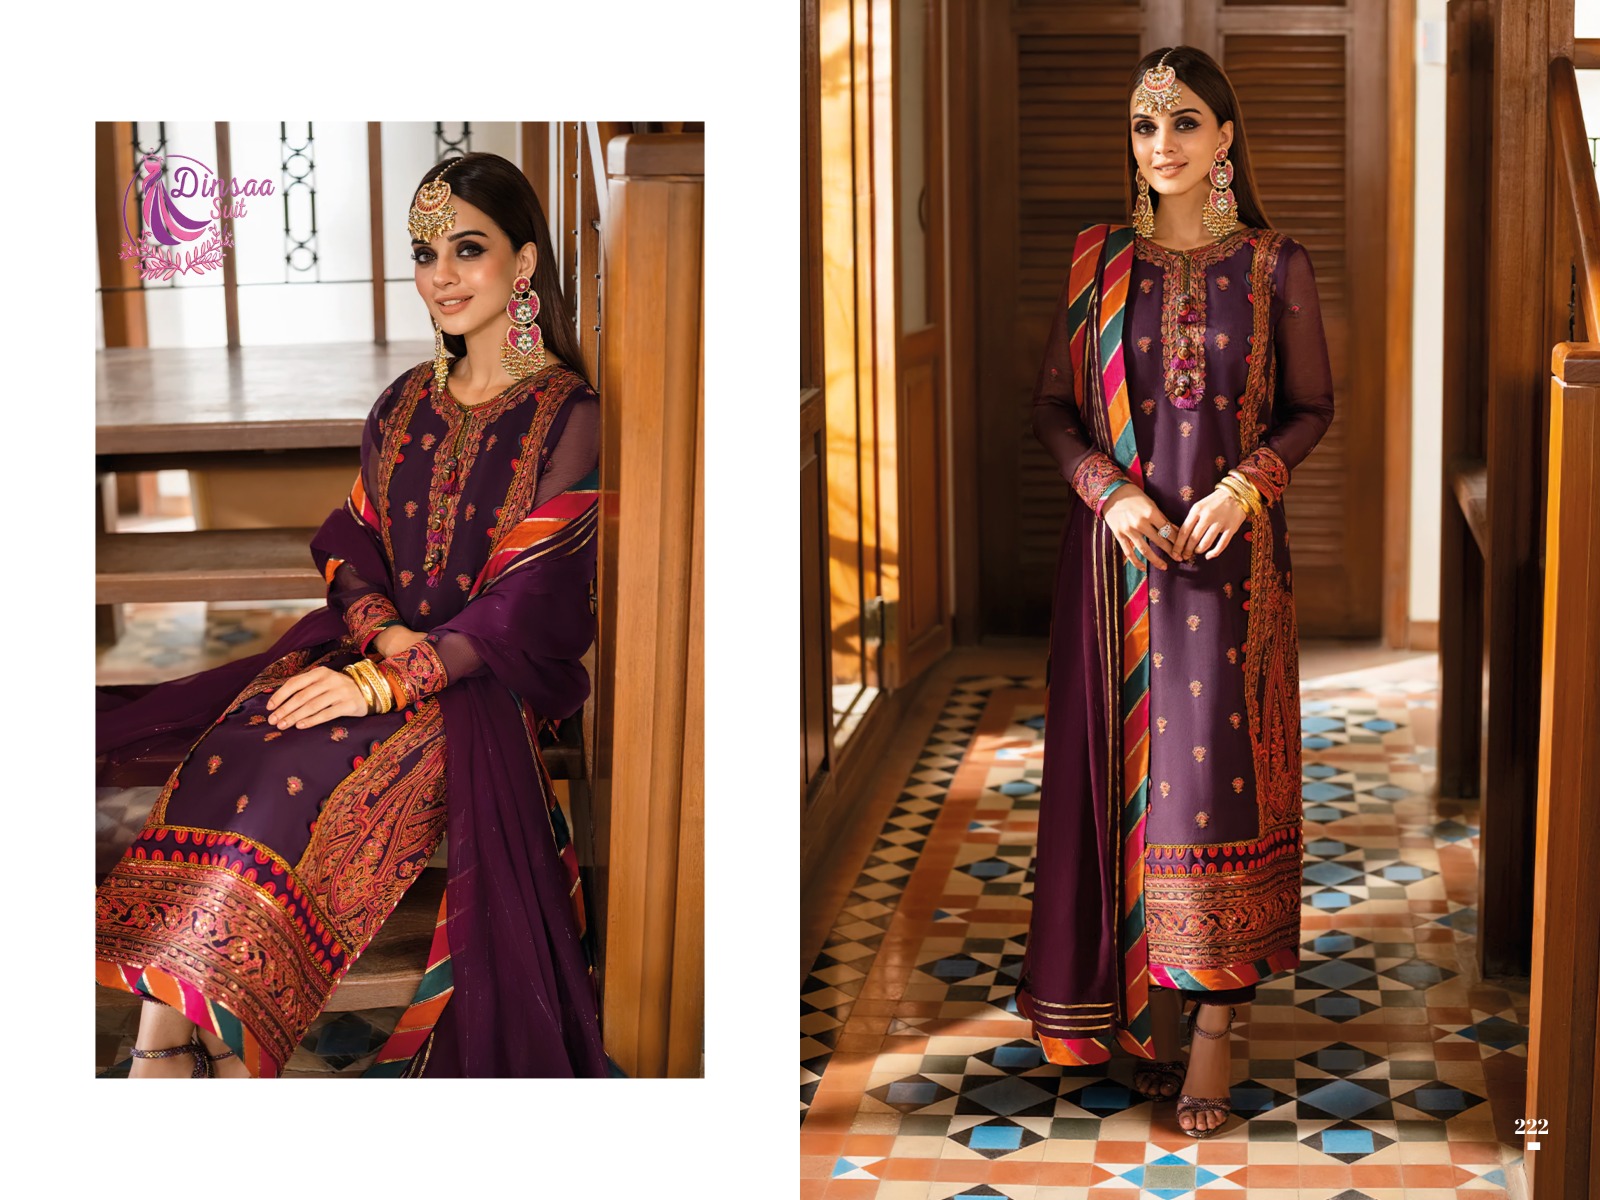 dinsaa suit ramsha hit vol 4 georgette elegant salwar suit catalog